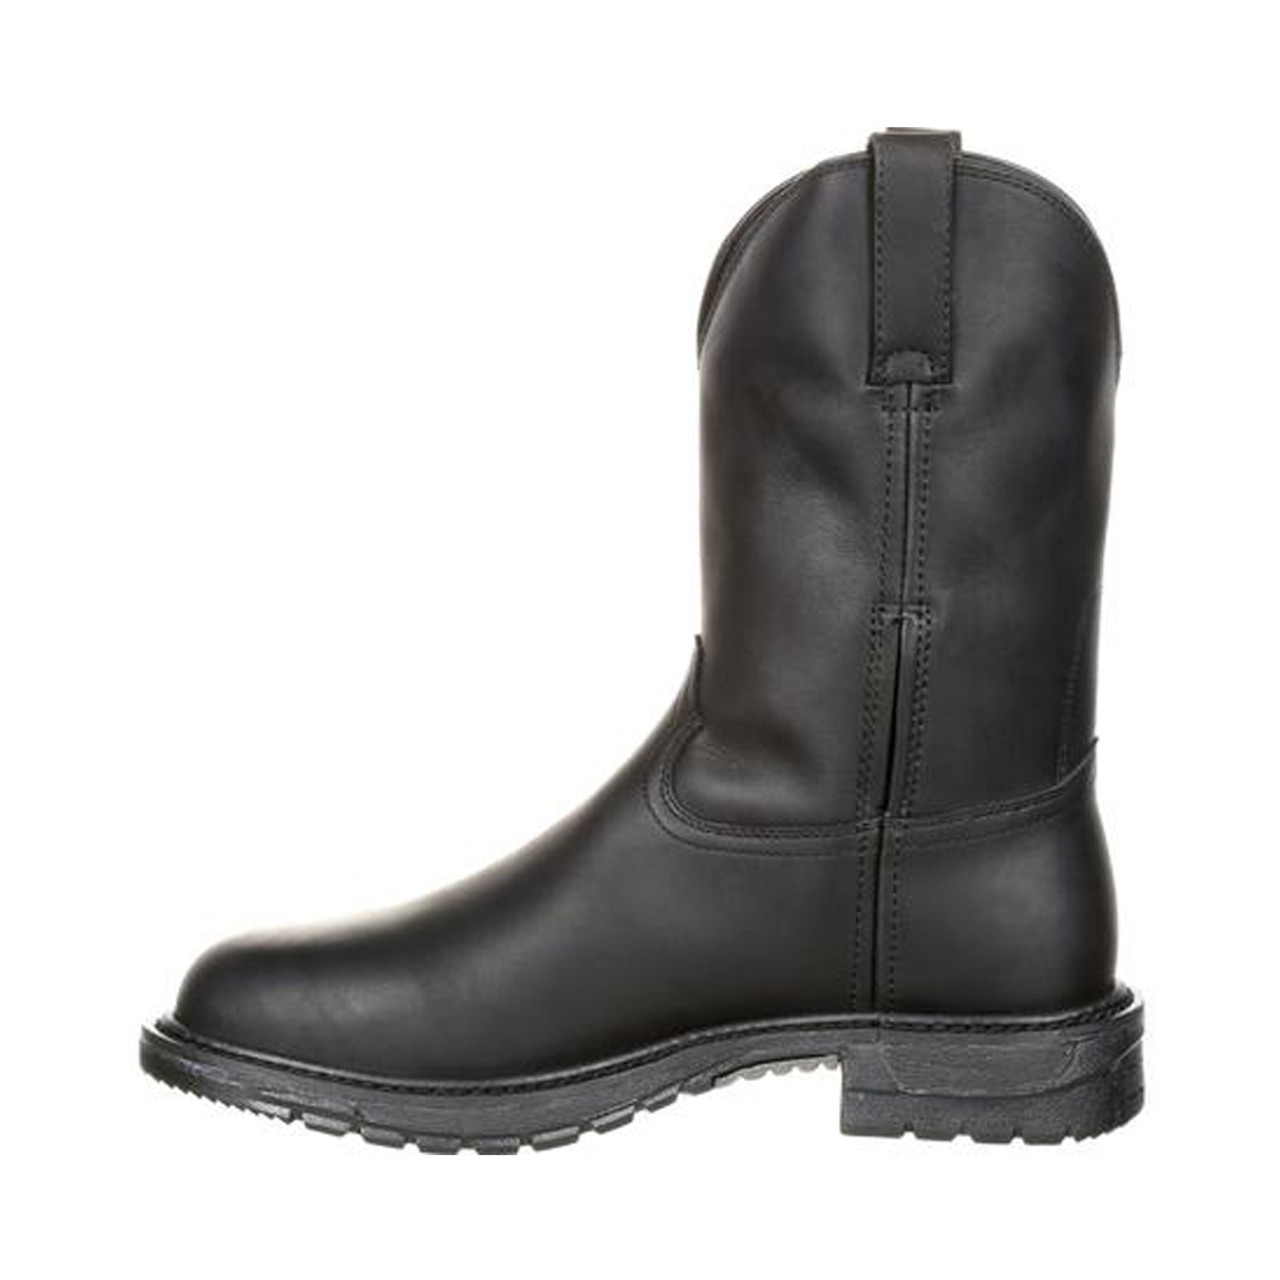 slip resistant western boots